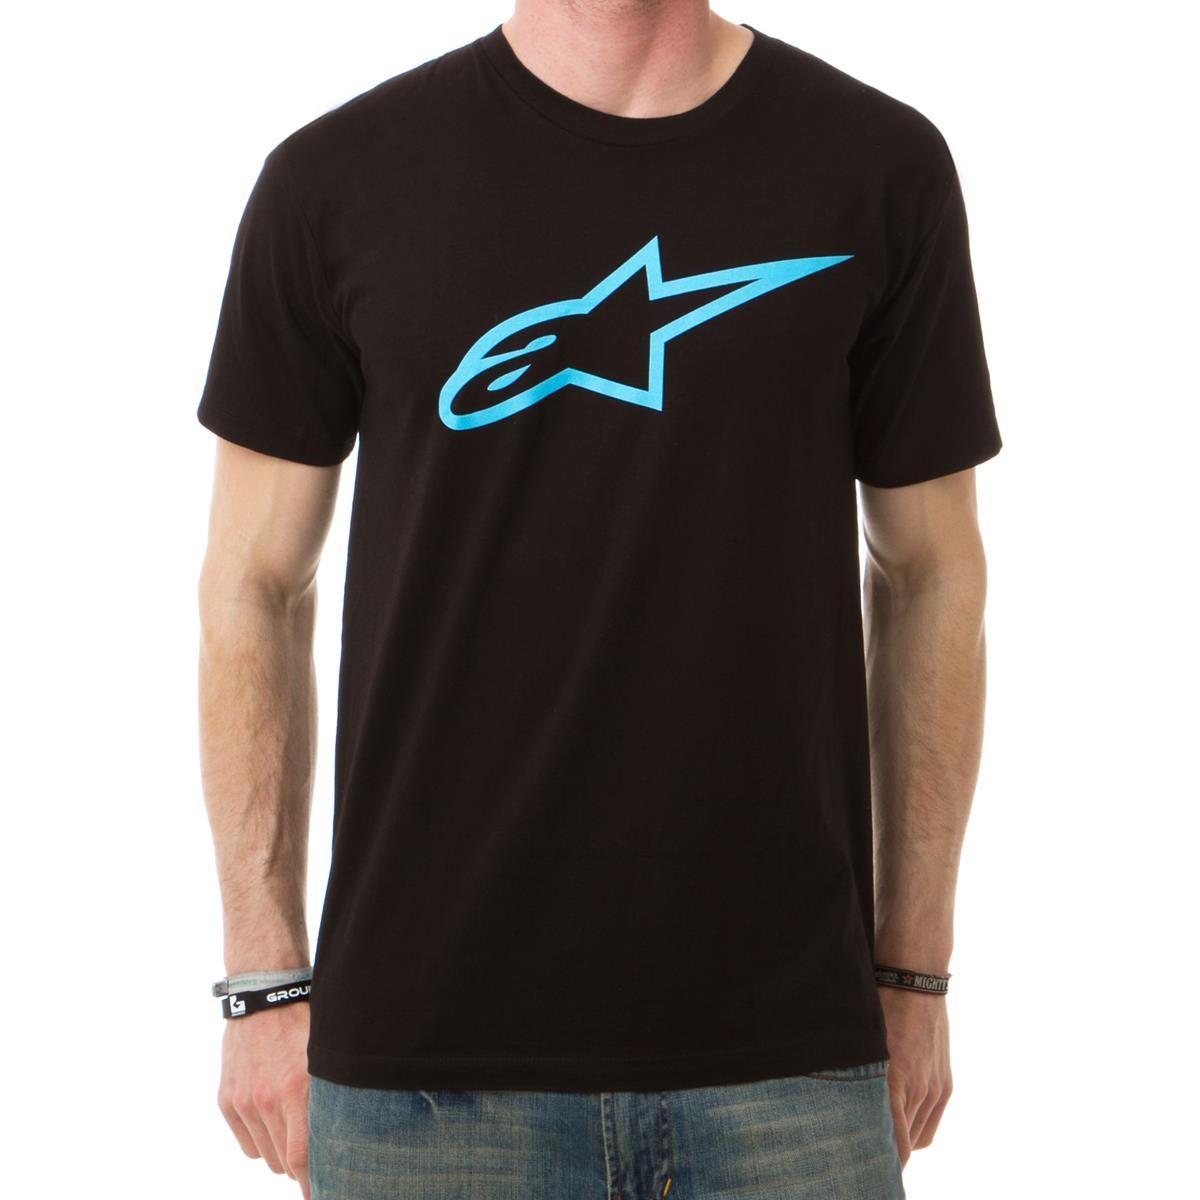 Freizeit/Streetwear Bekleidung-T-Shirts/Polos - Alpinestars T-Shirt Alpinestars Logo Black/Blue